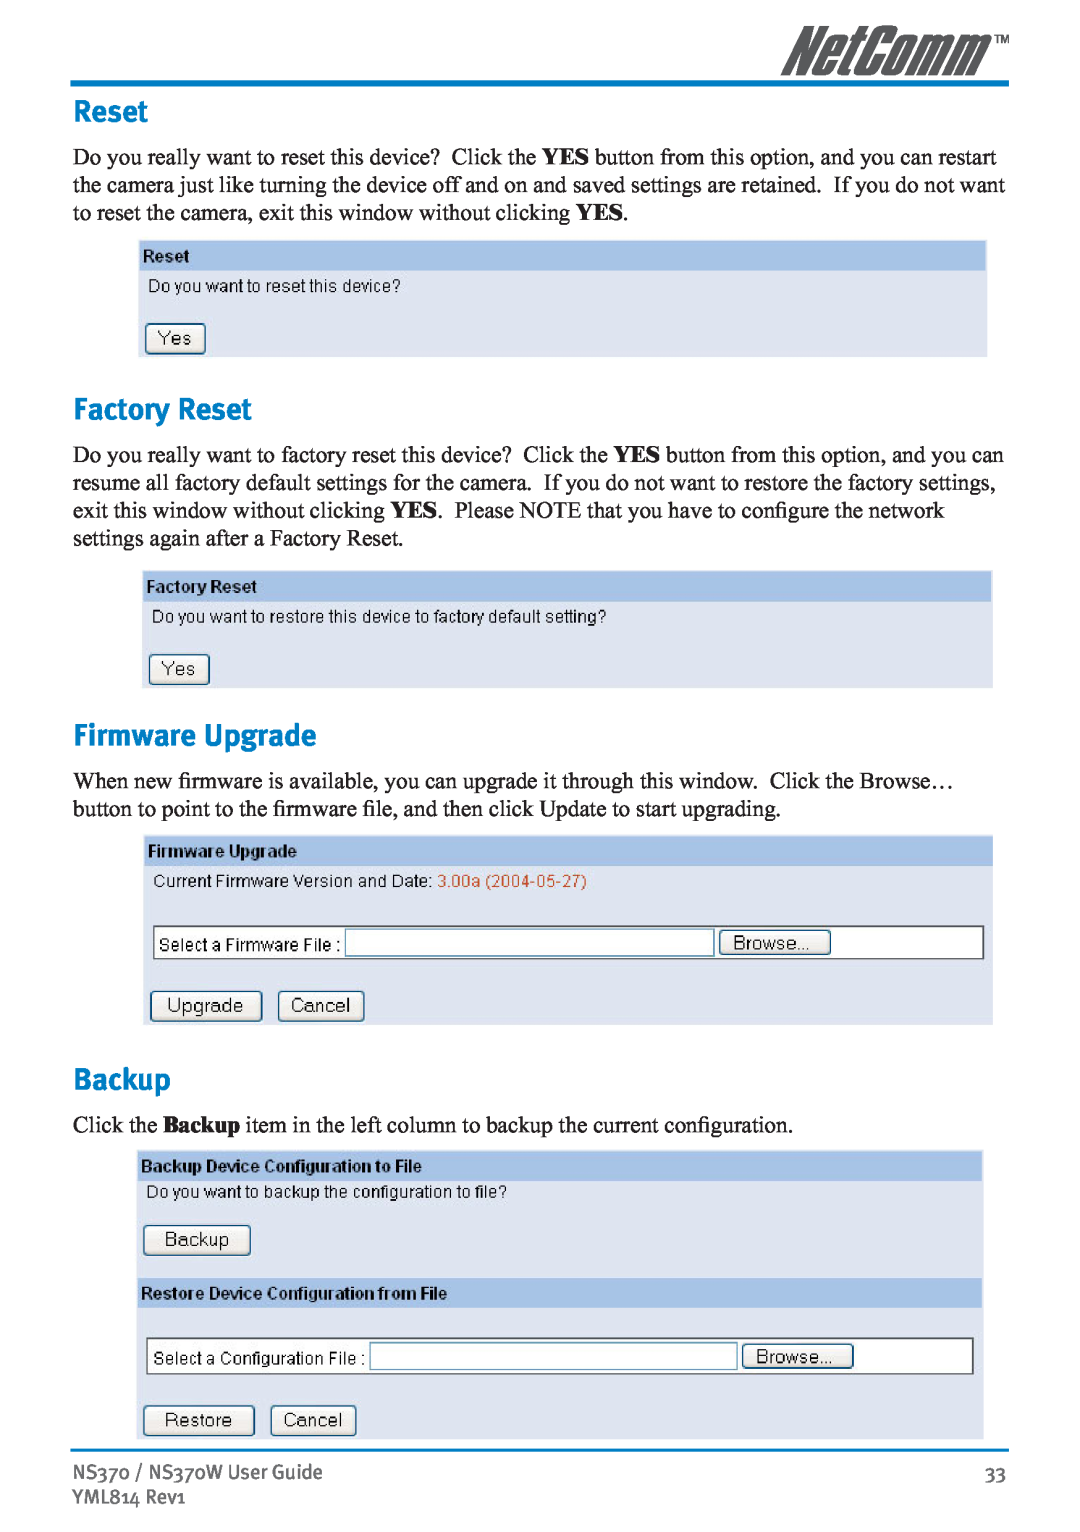 NetComm NS370W manual Factory Reset, Firmware Upgrade, Backup 